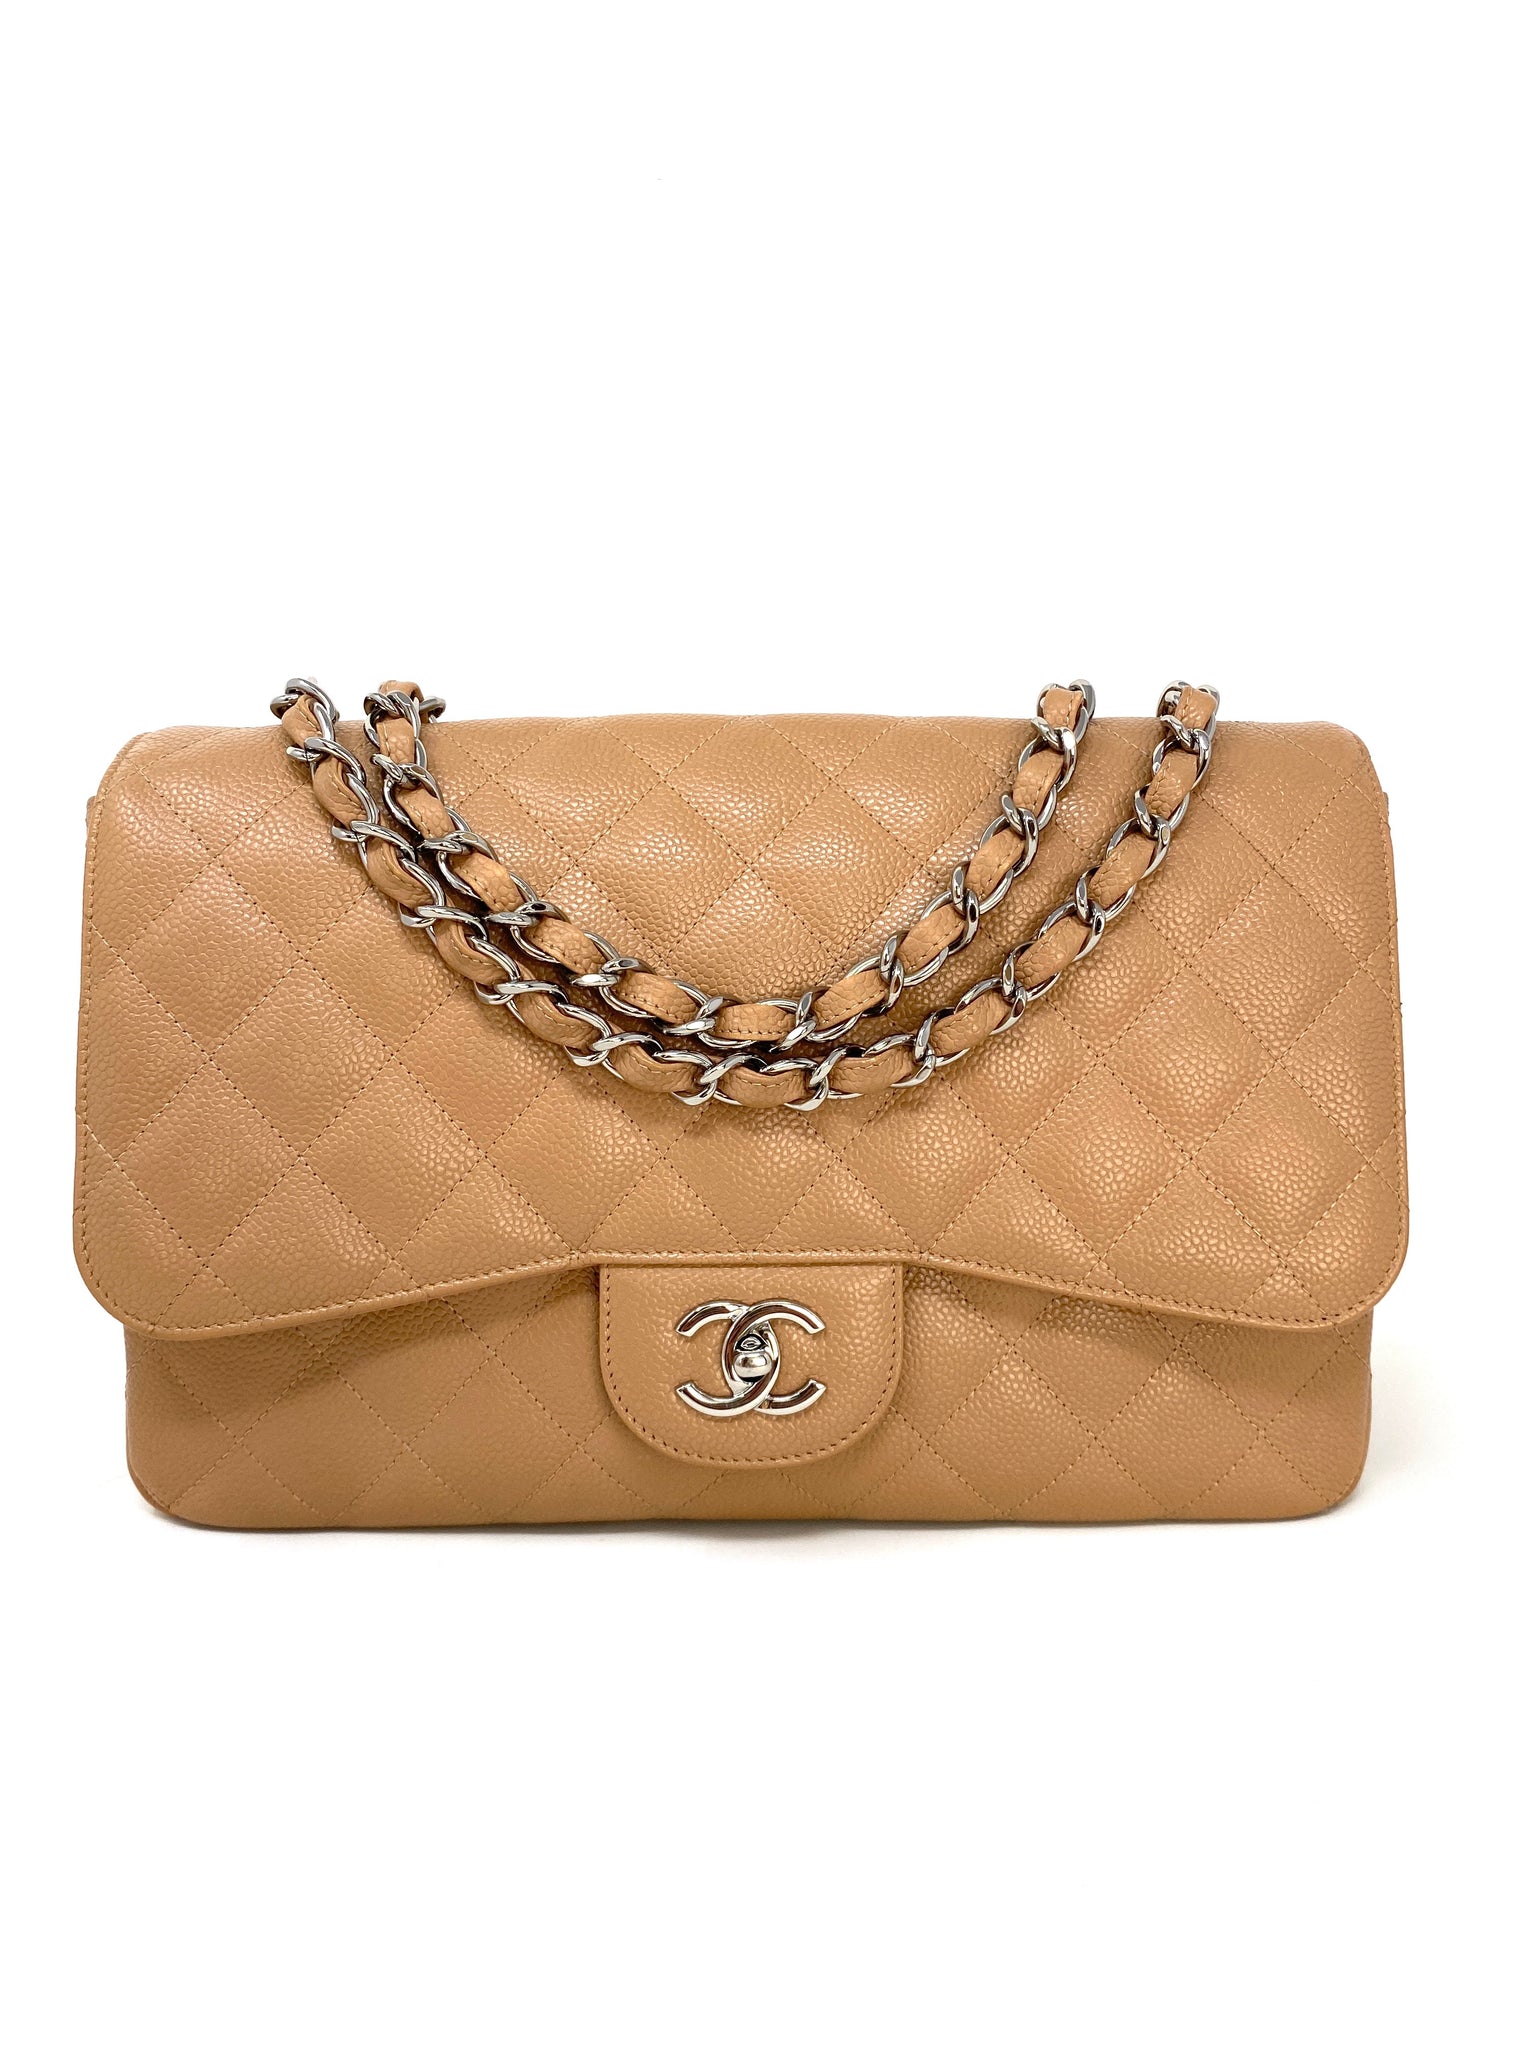 Chanel Classic Jumbo Size Luxury Bags  Wallets on Carousell